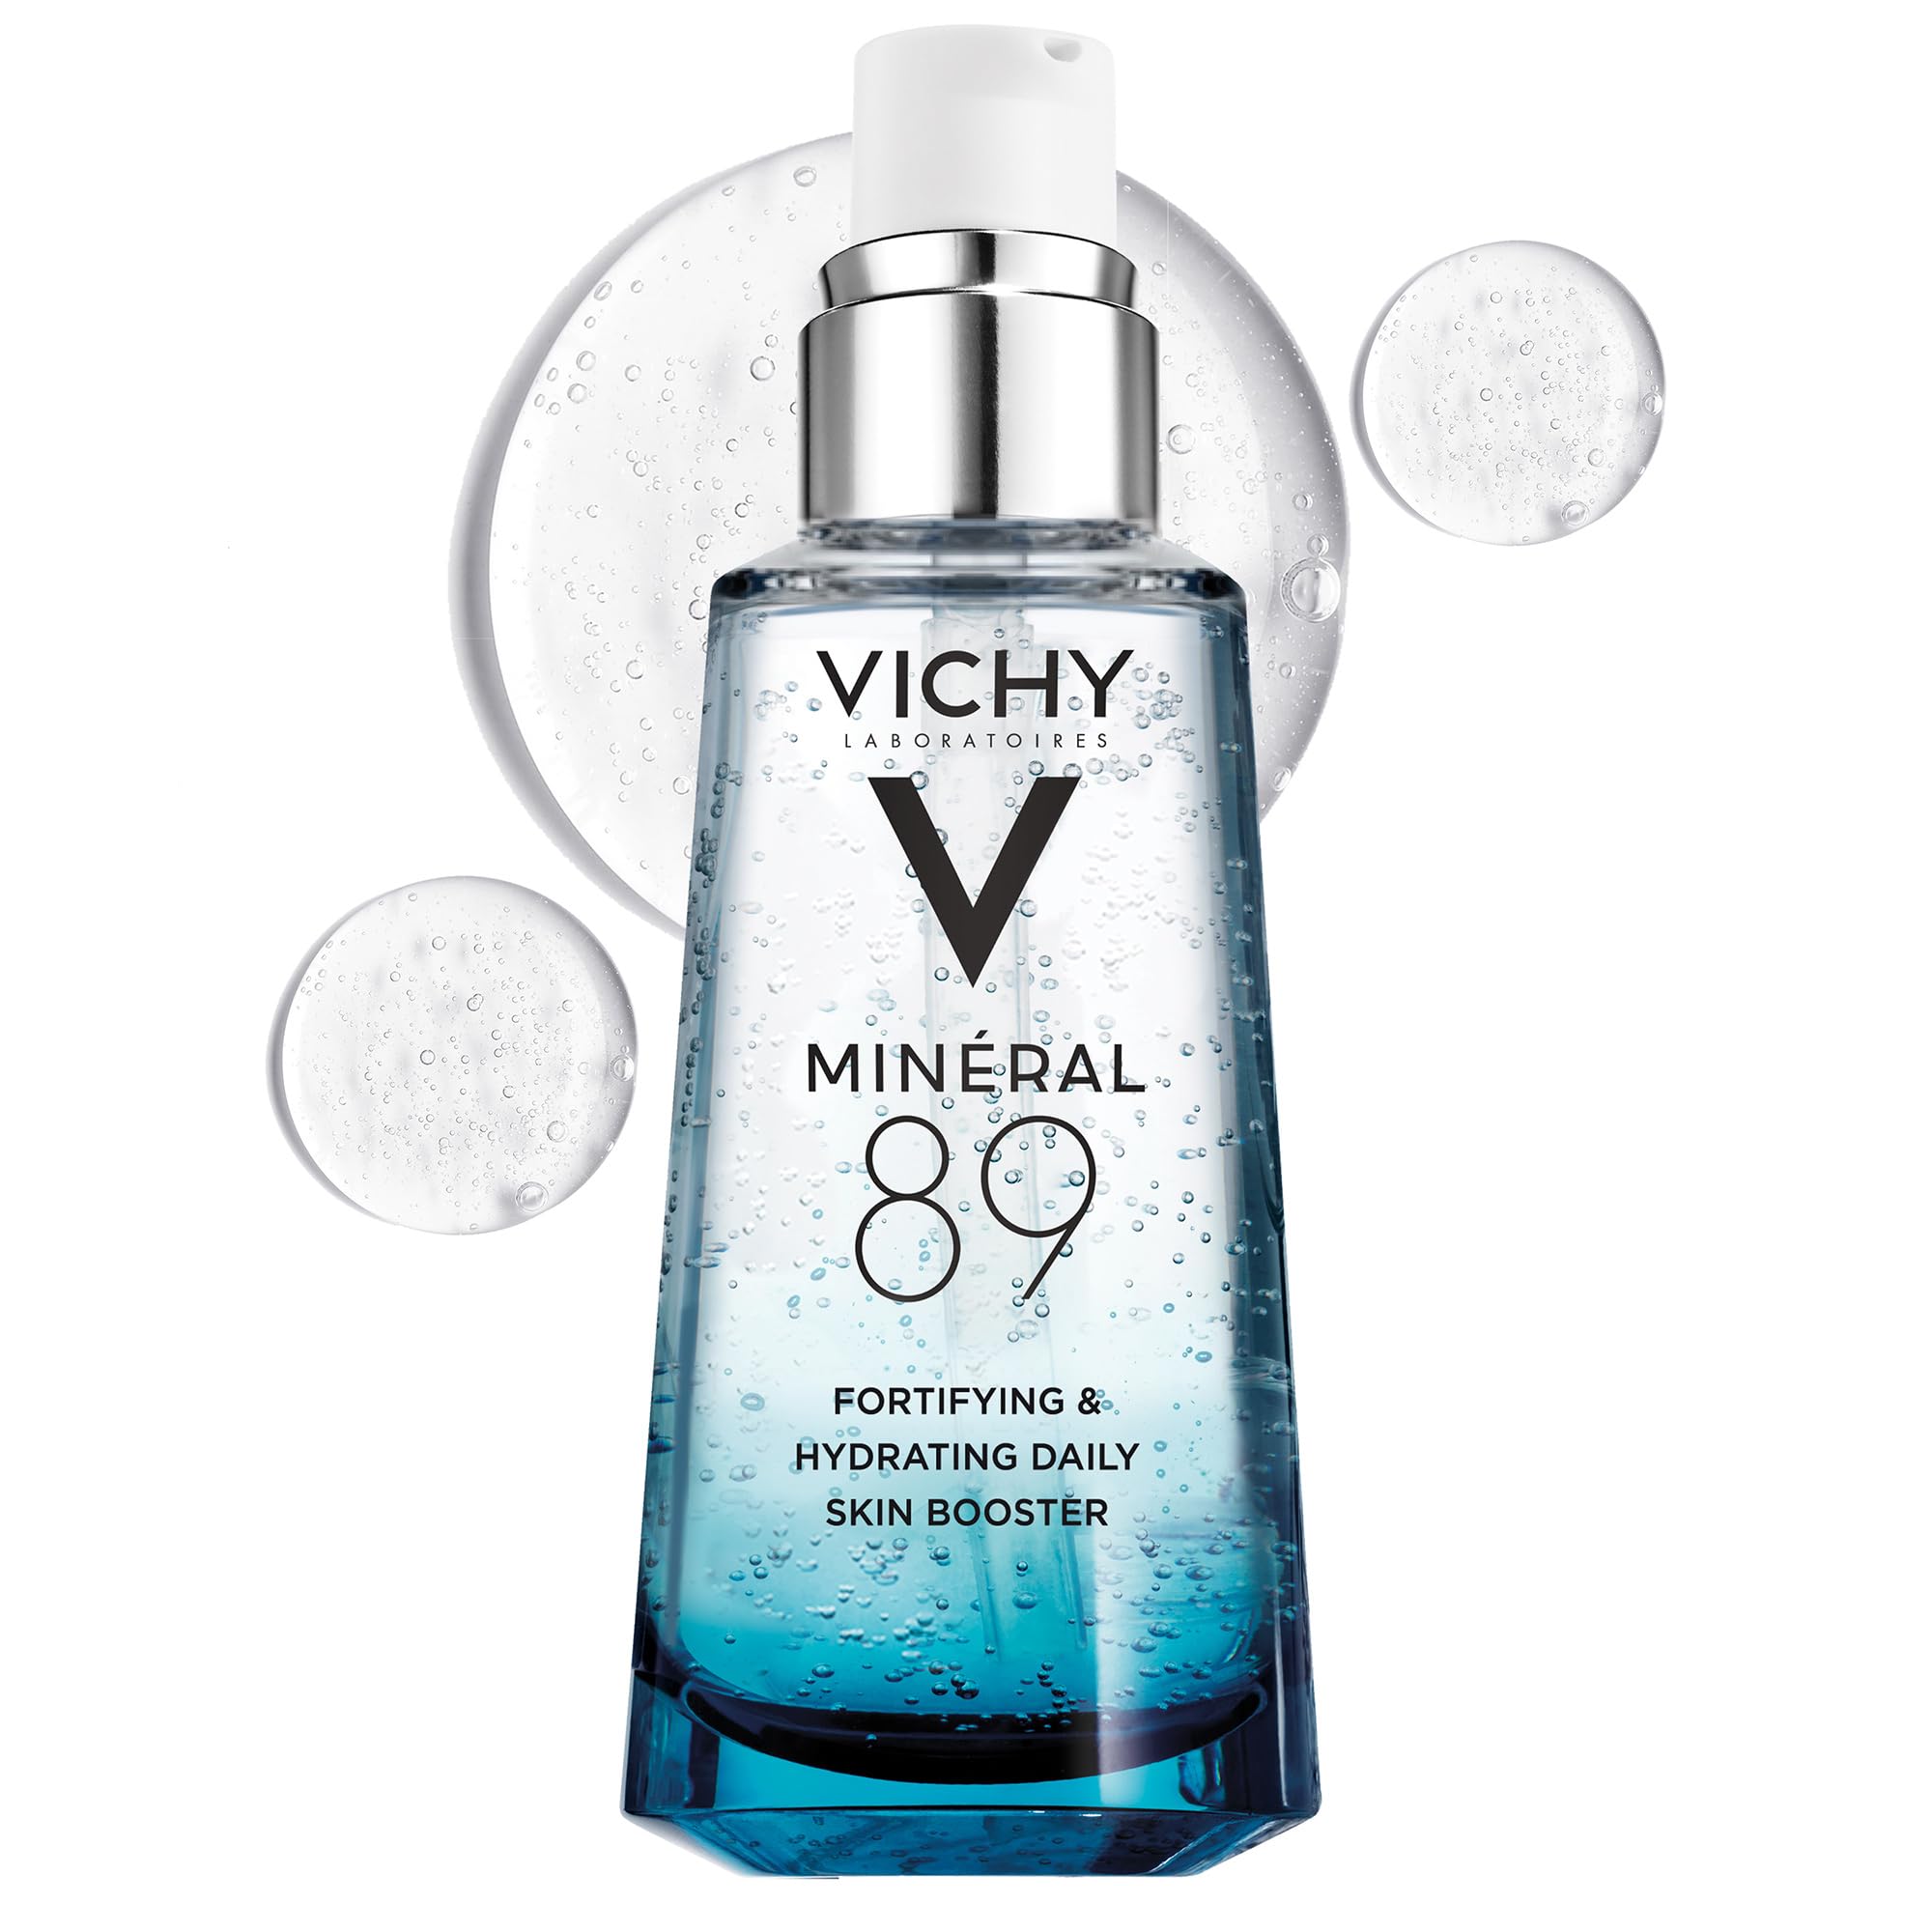 Vichy Mineral 89 Face Serum | Facial Gel Moisturizer an...